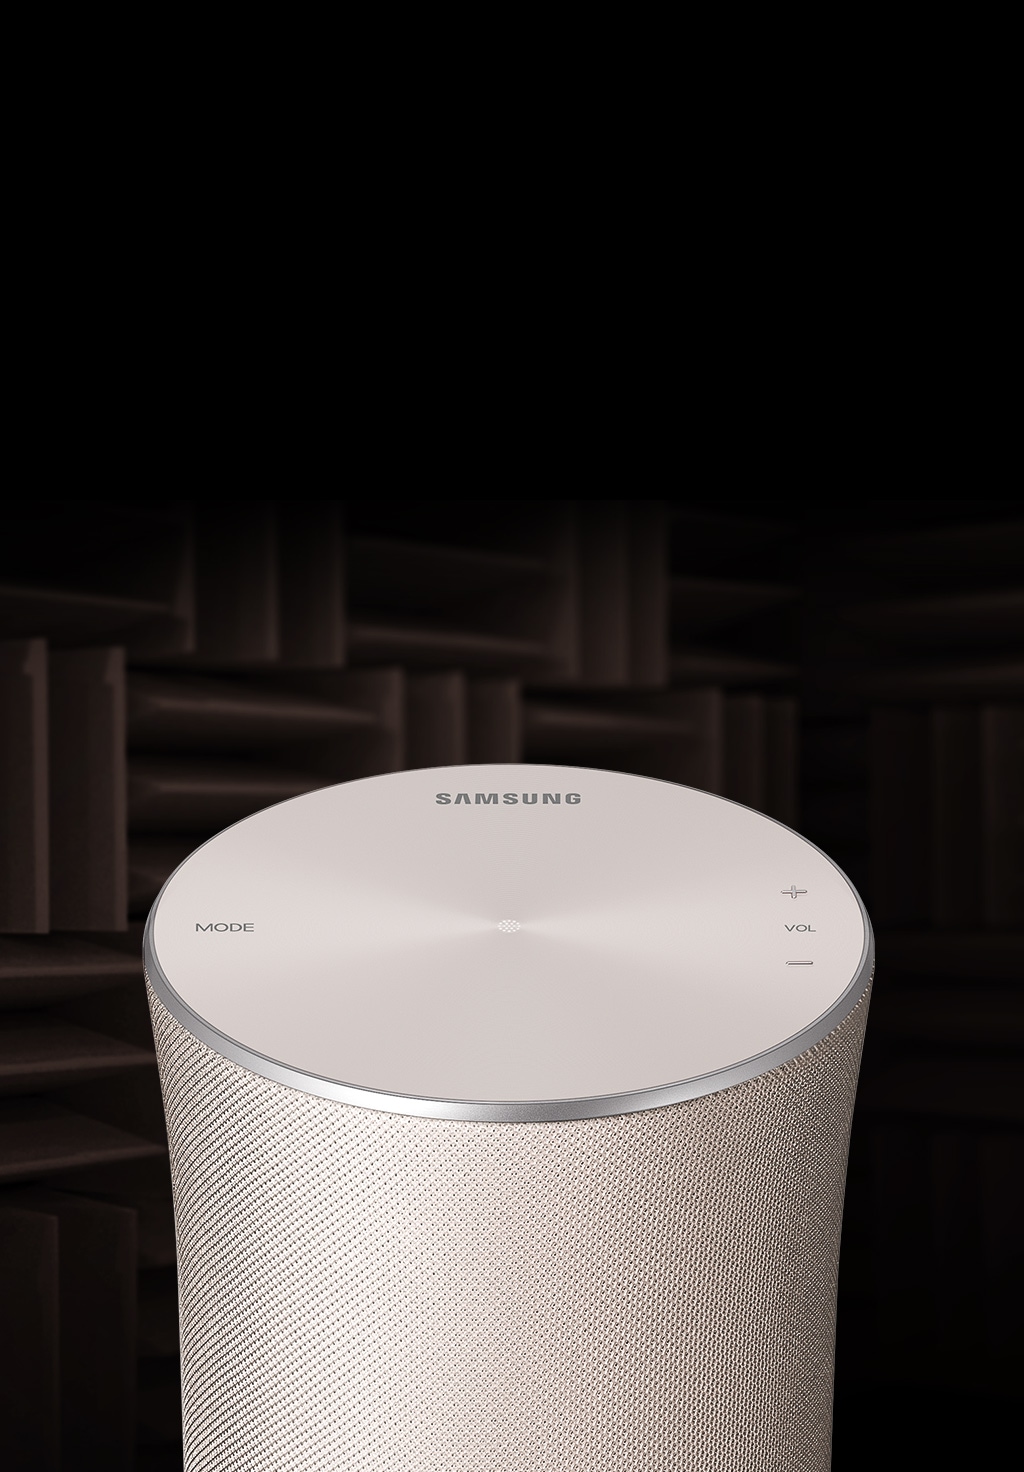 kolf Bijna dood ornament 360 Multiroom Speaker with Wi-Fi & Bluetooth | Samsung UK